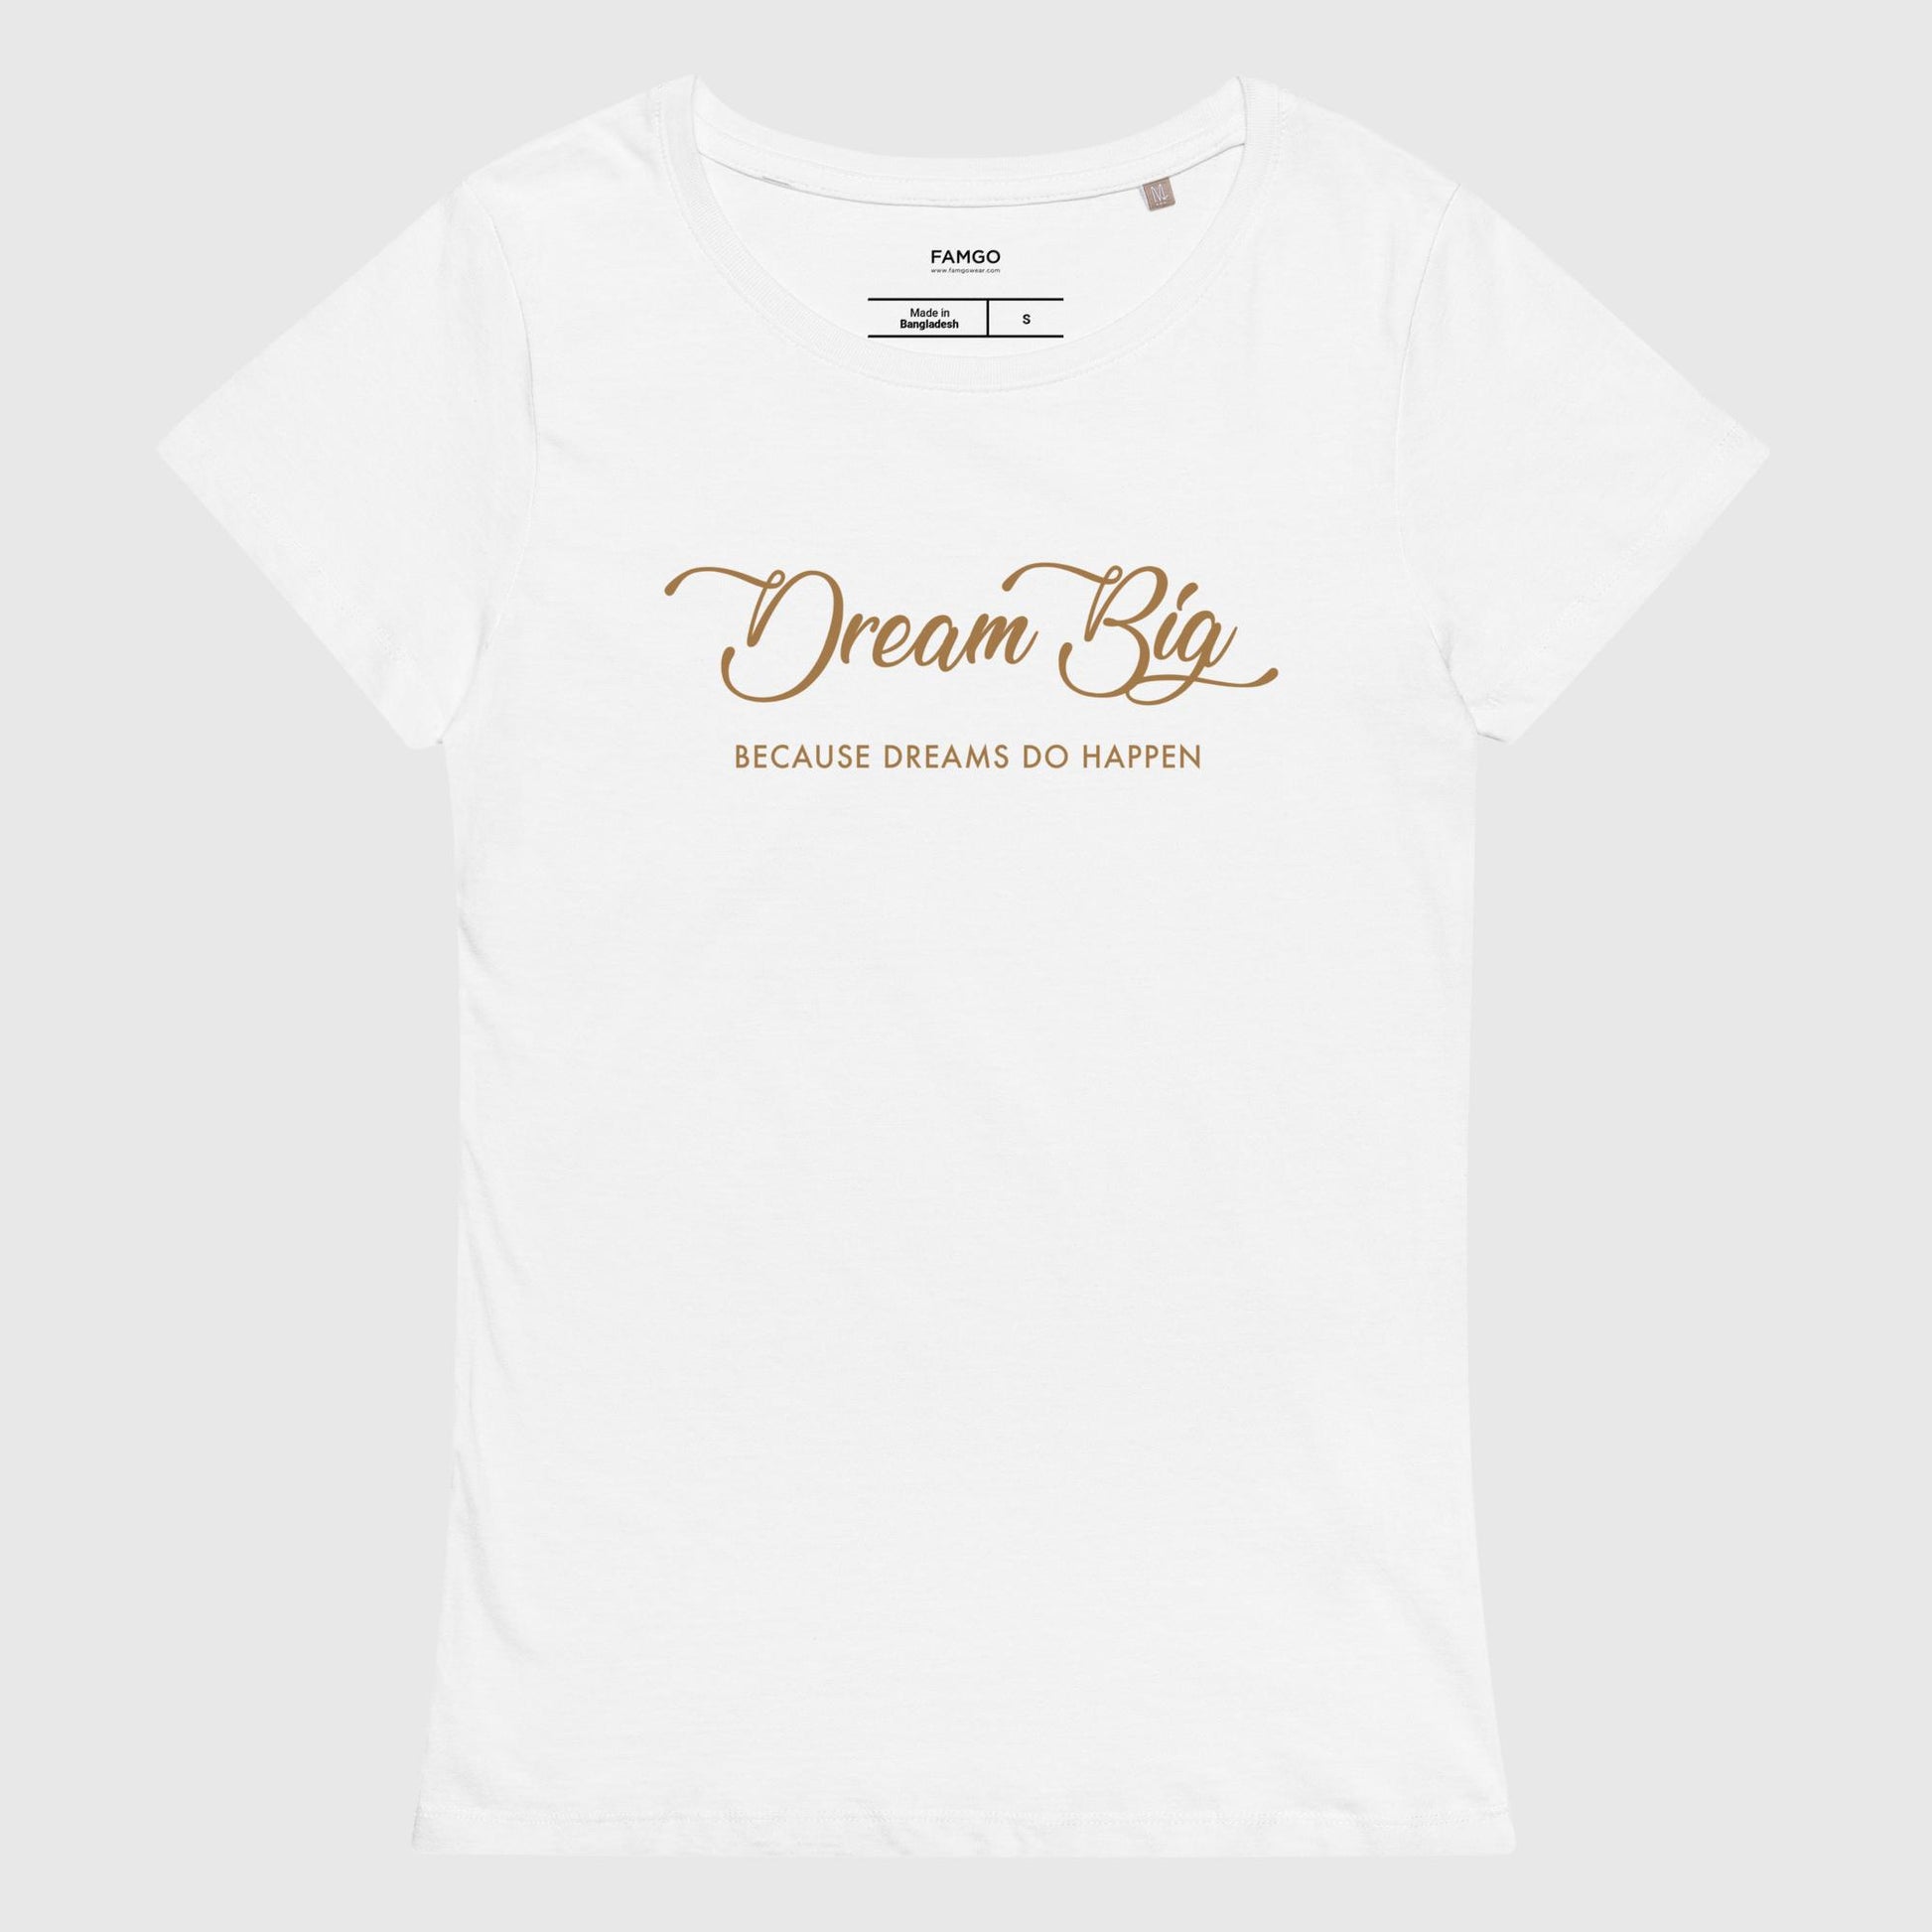 Women's white organic cotton t-shirt that features Alex Morgan's inspirational quote, "Dream Big - Because Dreams Do Happen."